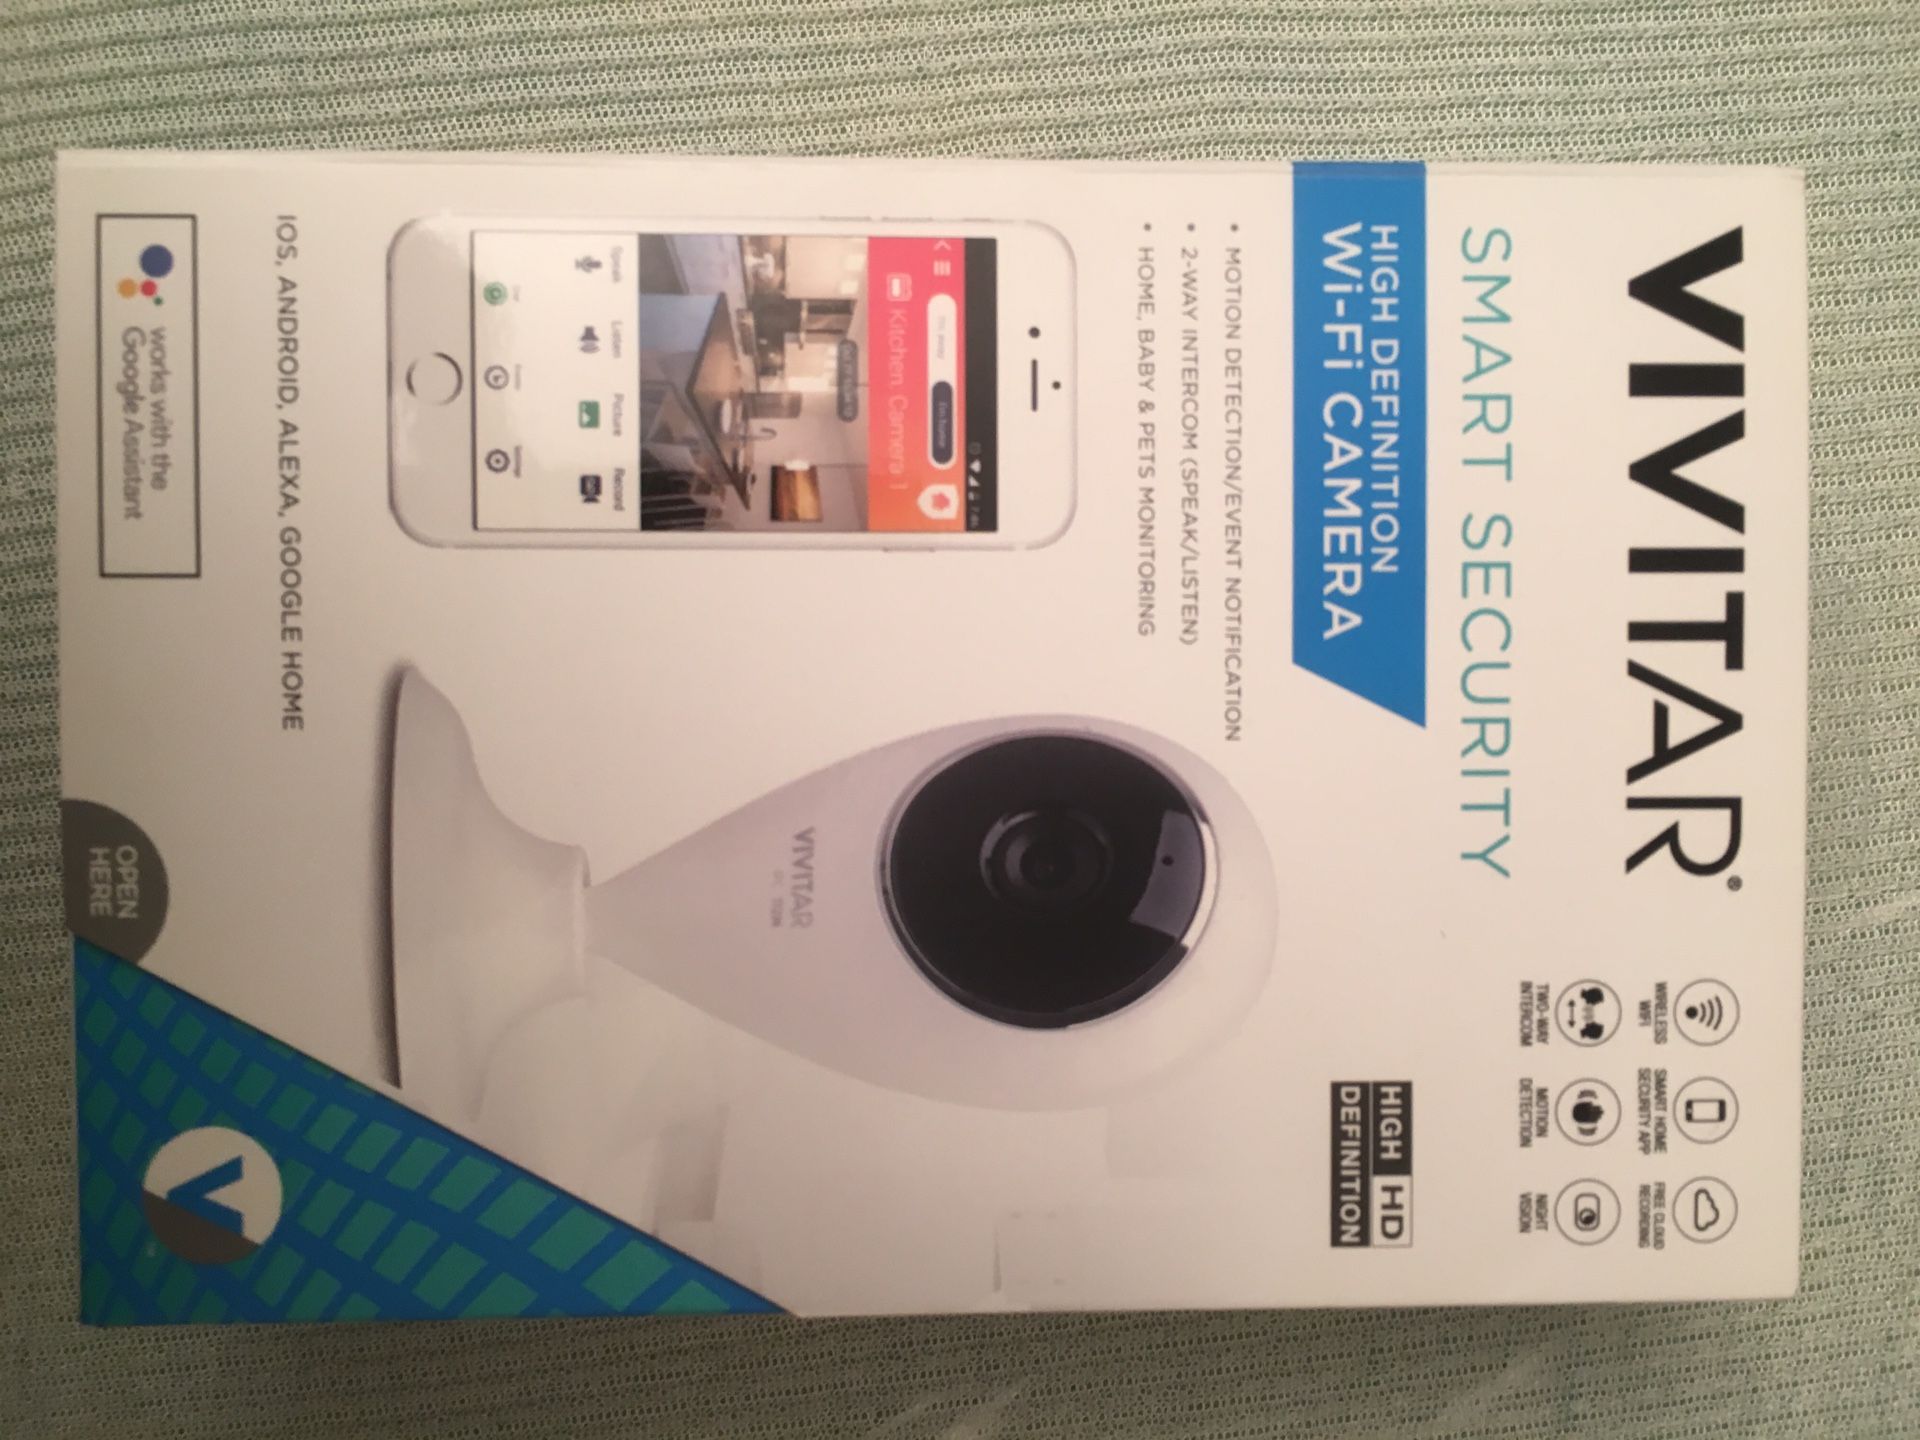 Vivitar smart security camera